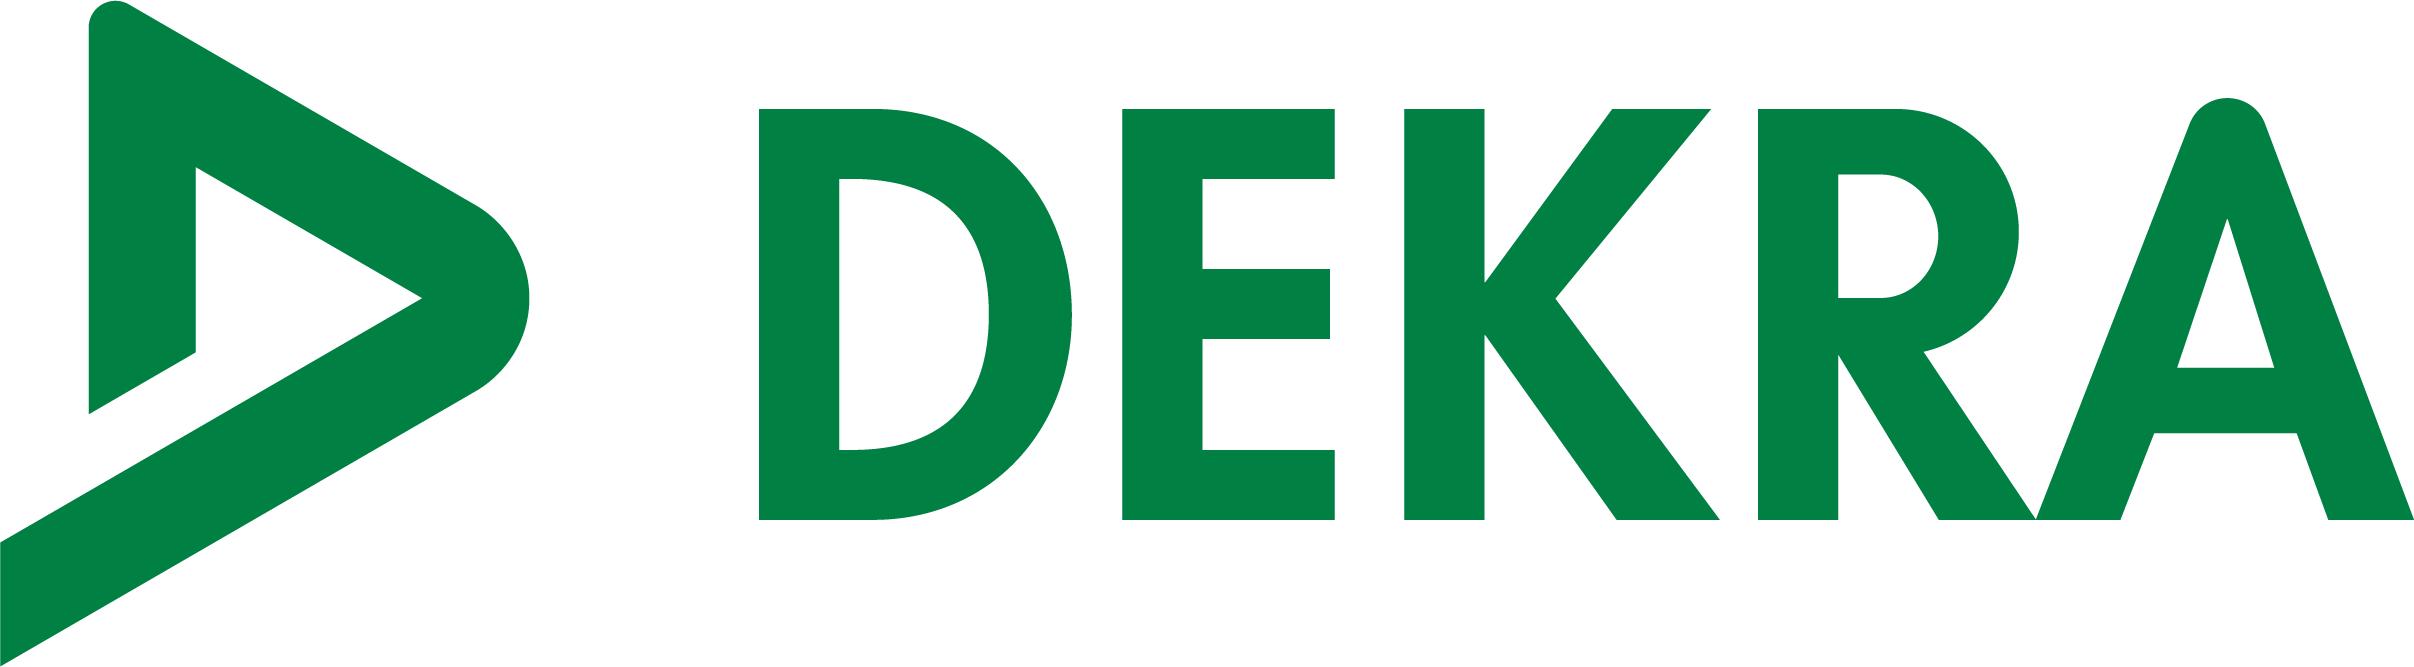 DEKRA certification - organisme certificateur et audit